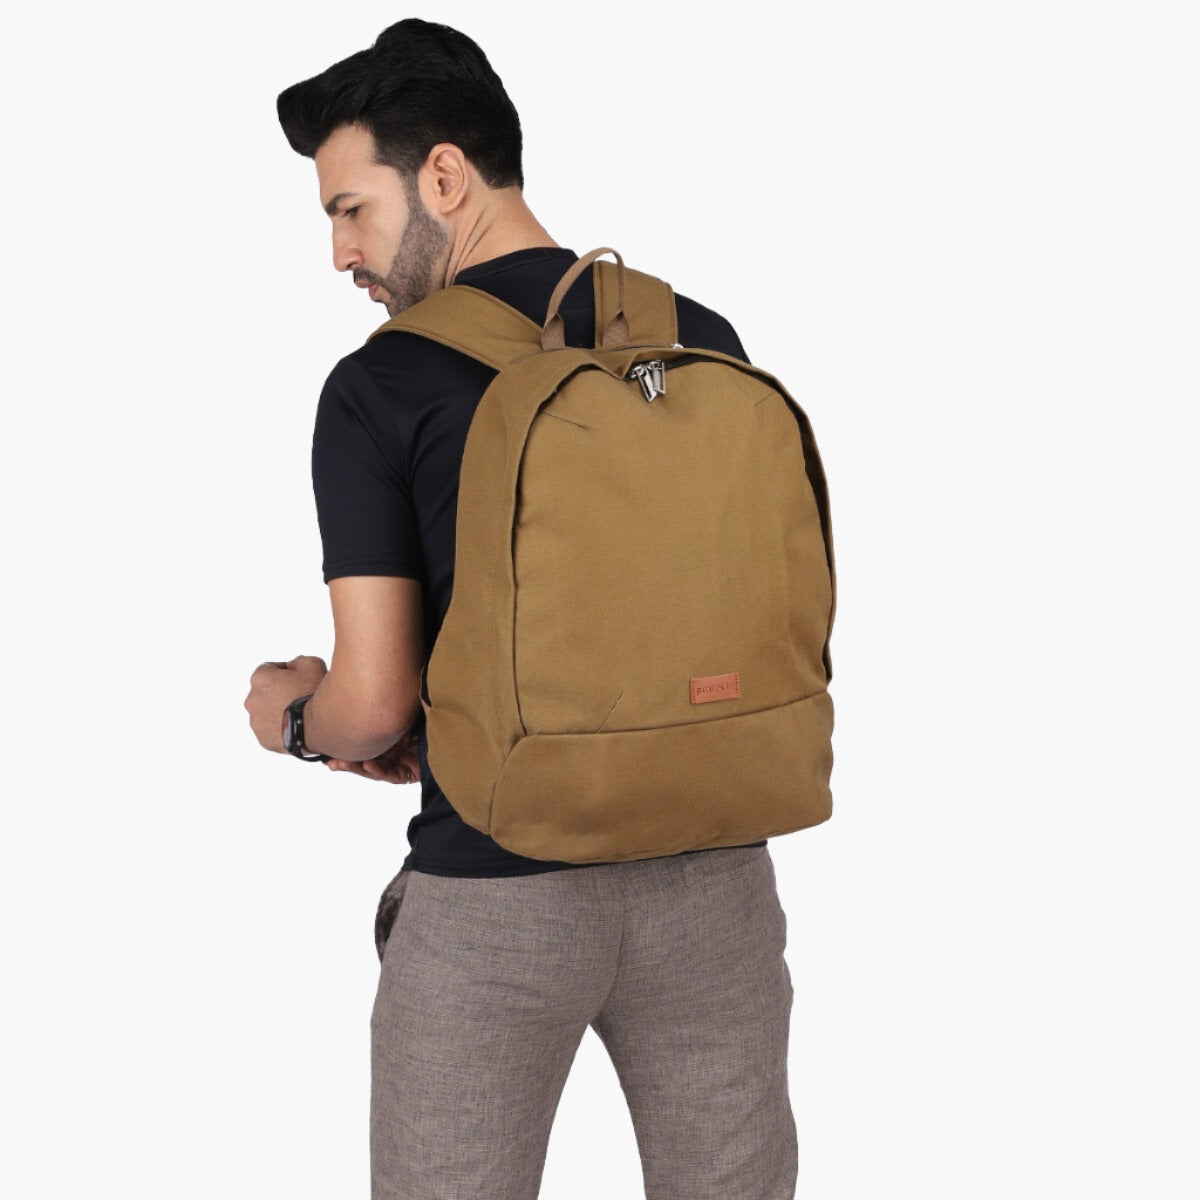 Beige | Protecta Steady Progress Laptop Backpack - 4